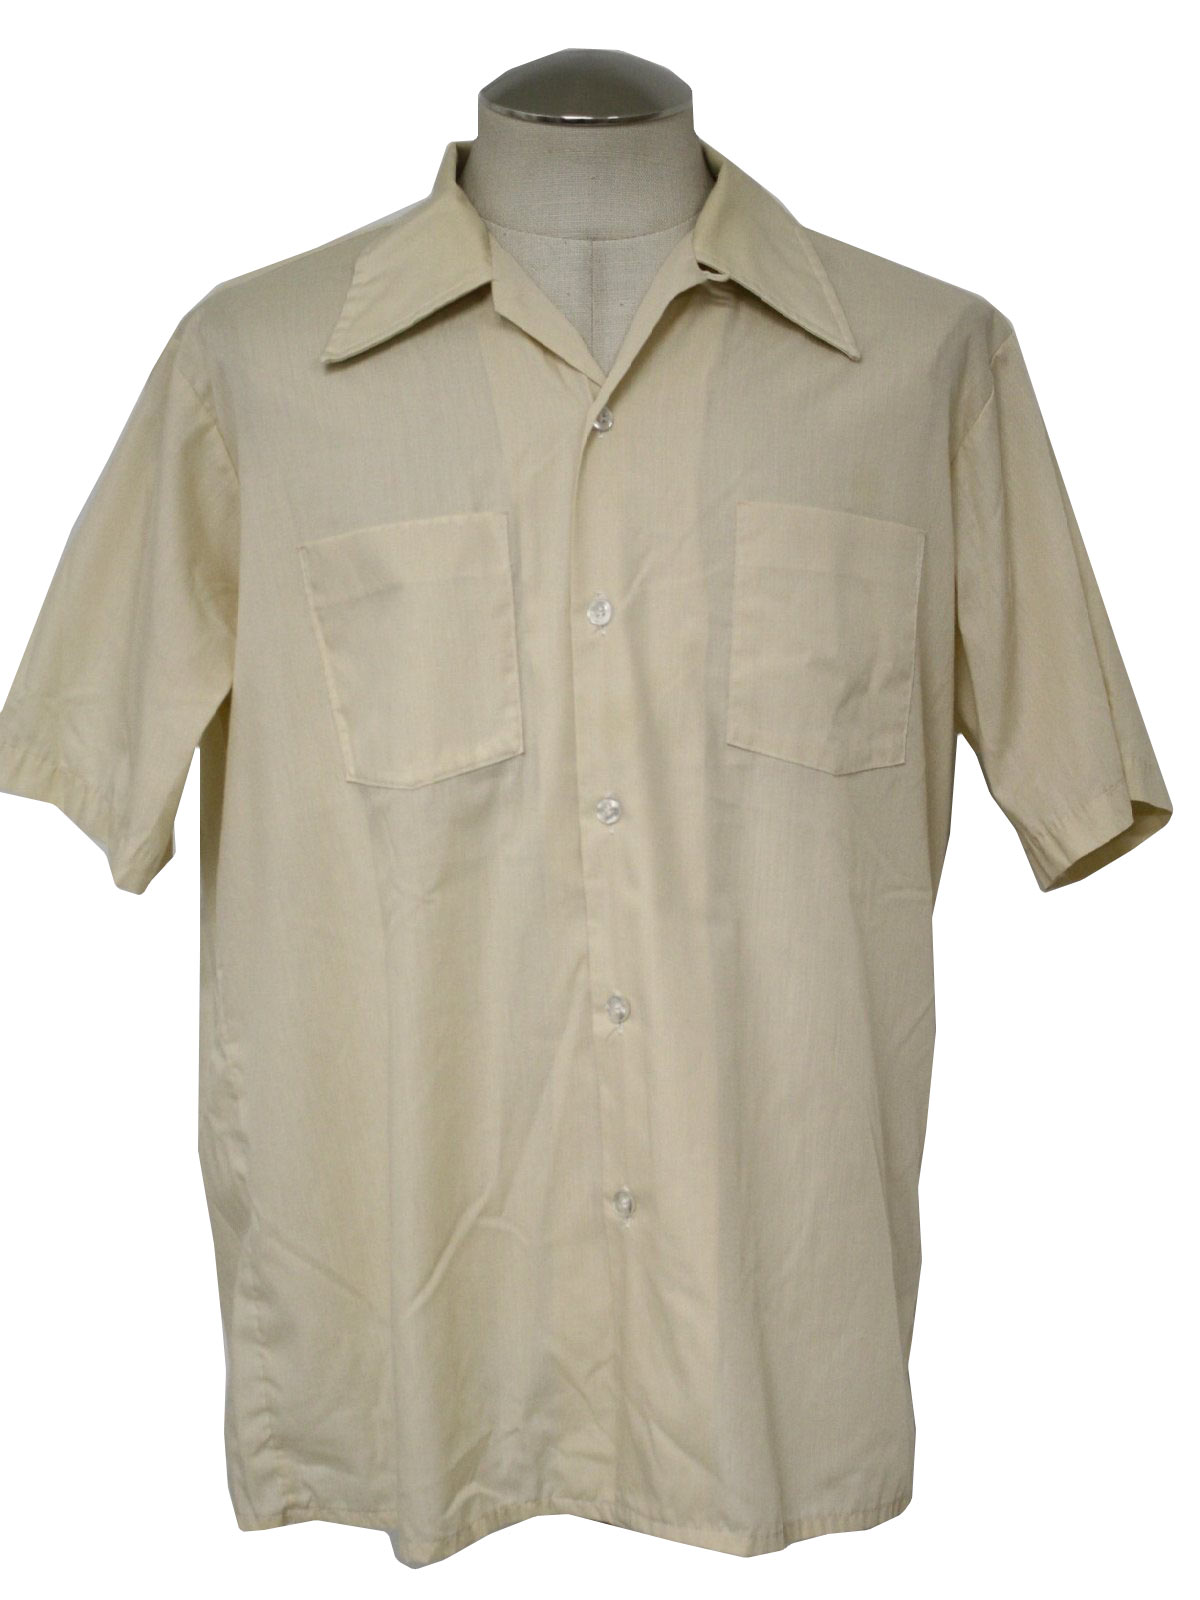 Retro 70s Shirt (Arrow) : 70s -Arrow- Mens tan cotton polyester short ...